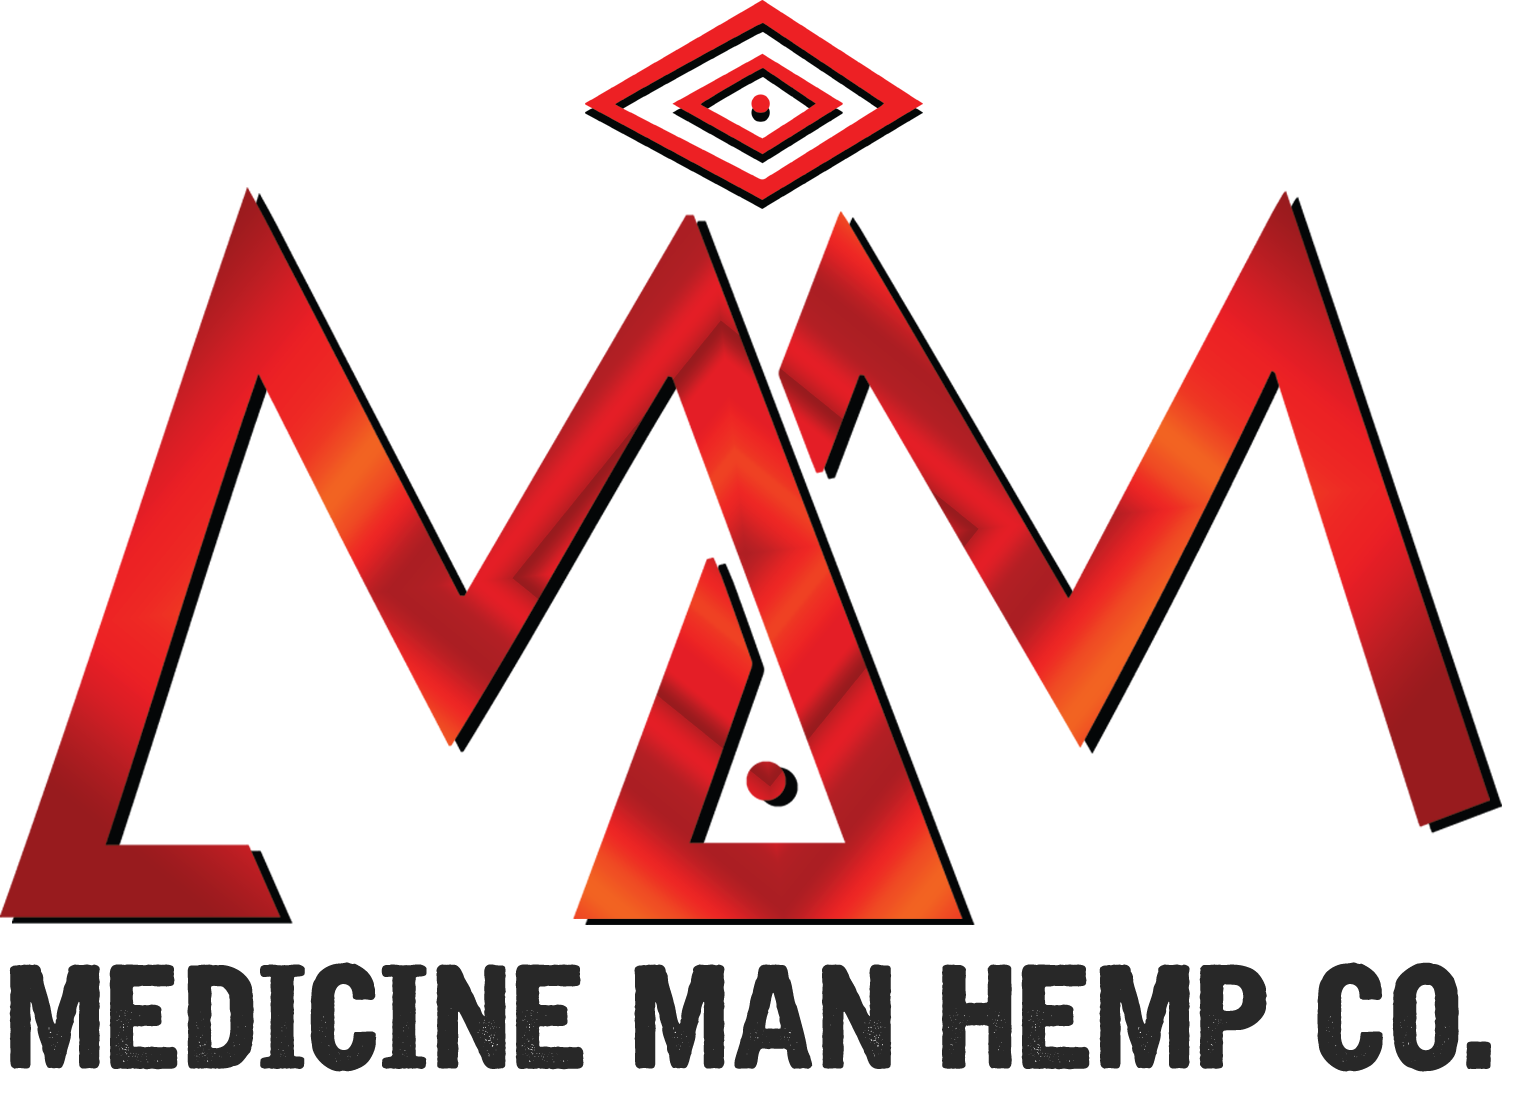 Medicine Man Hemp Co